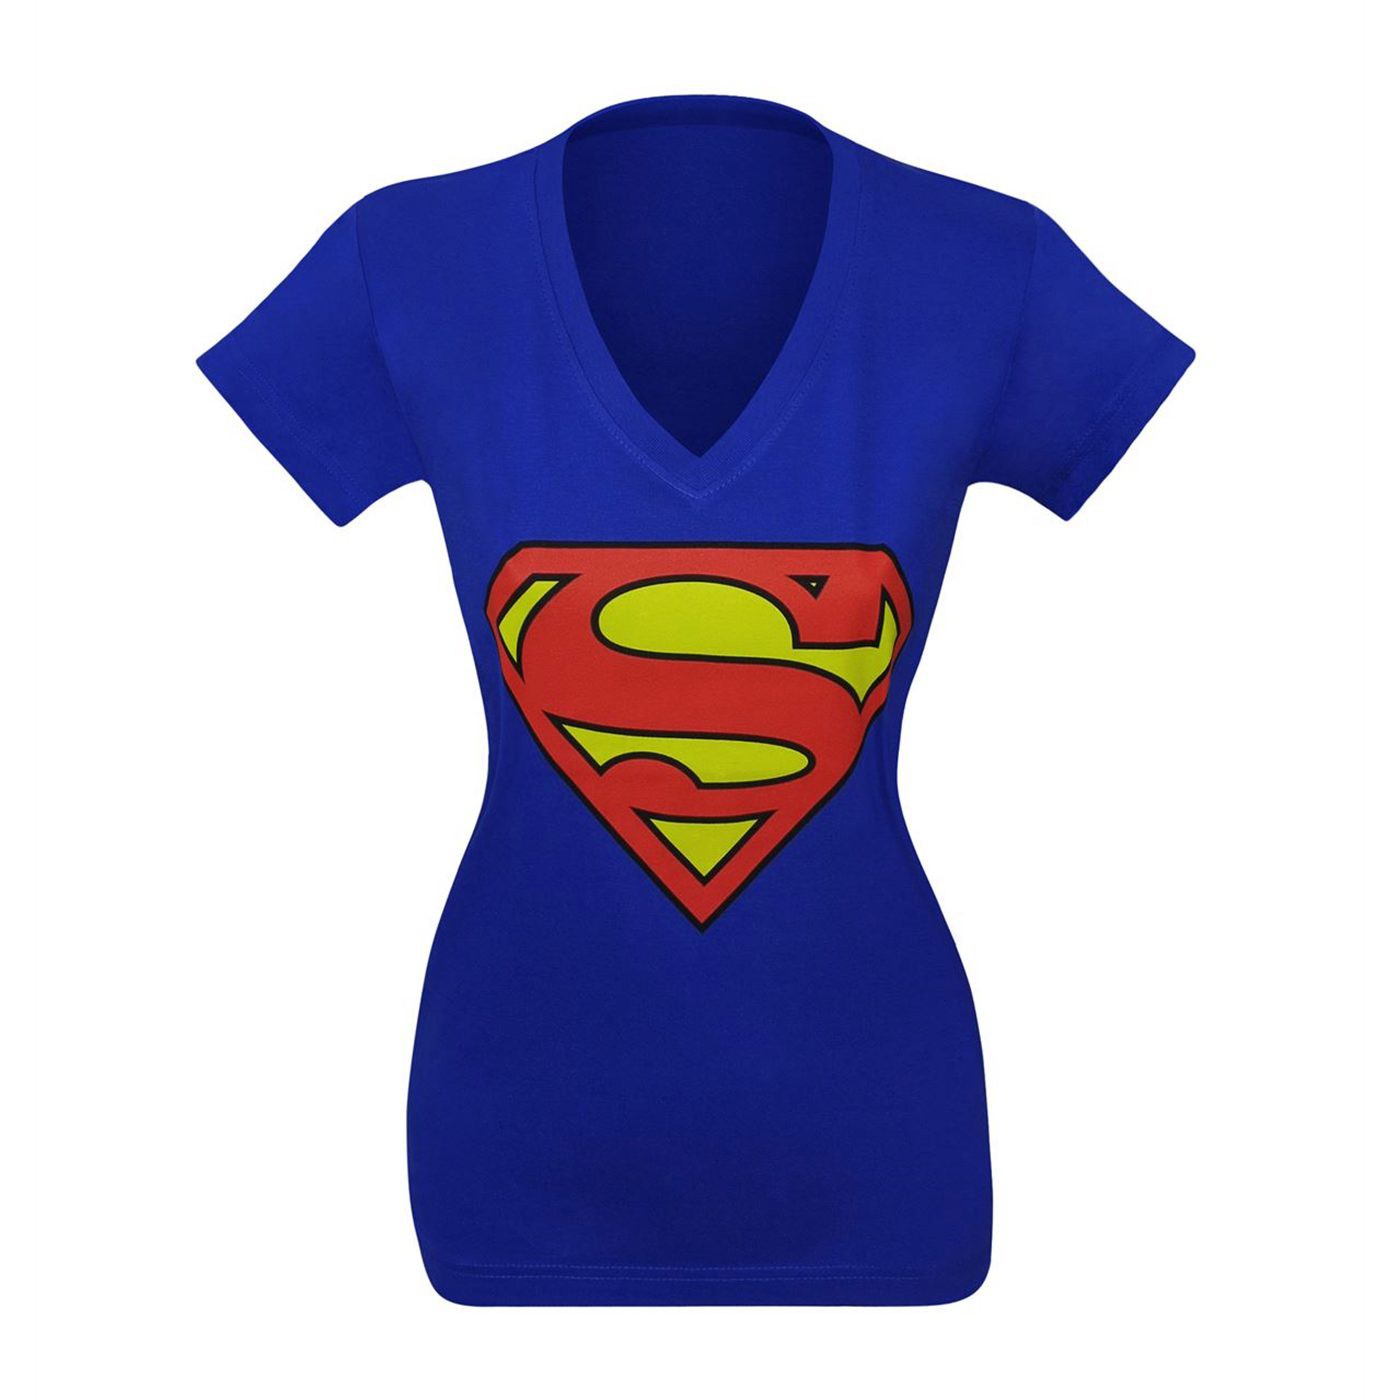 Superman Symbol on Royal Women's V-Neck